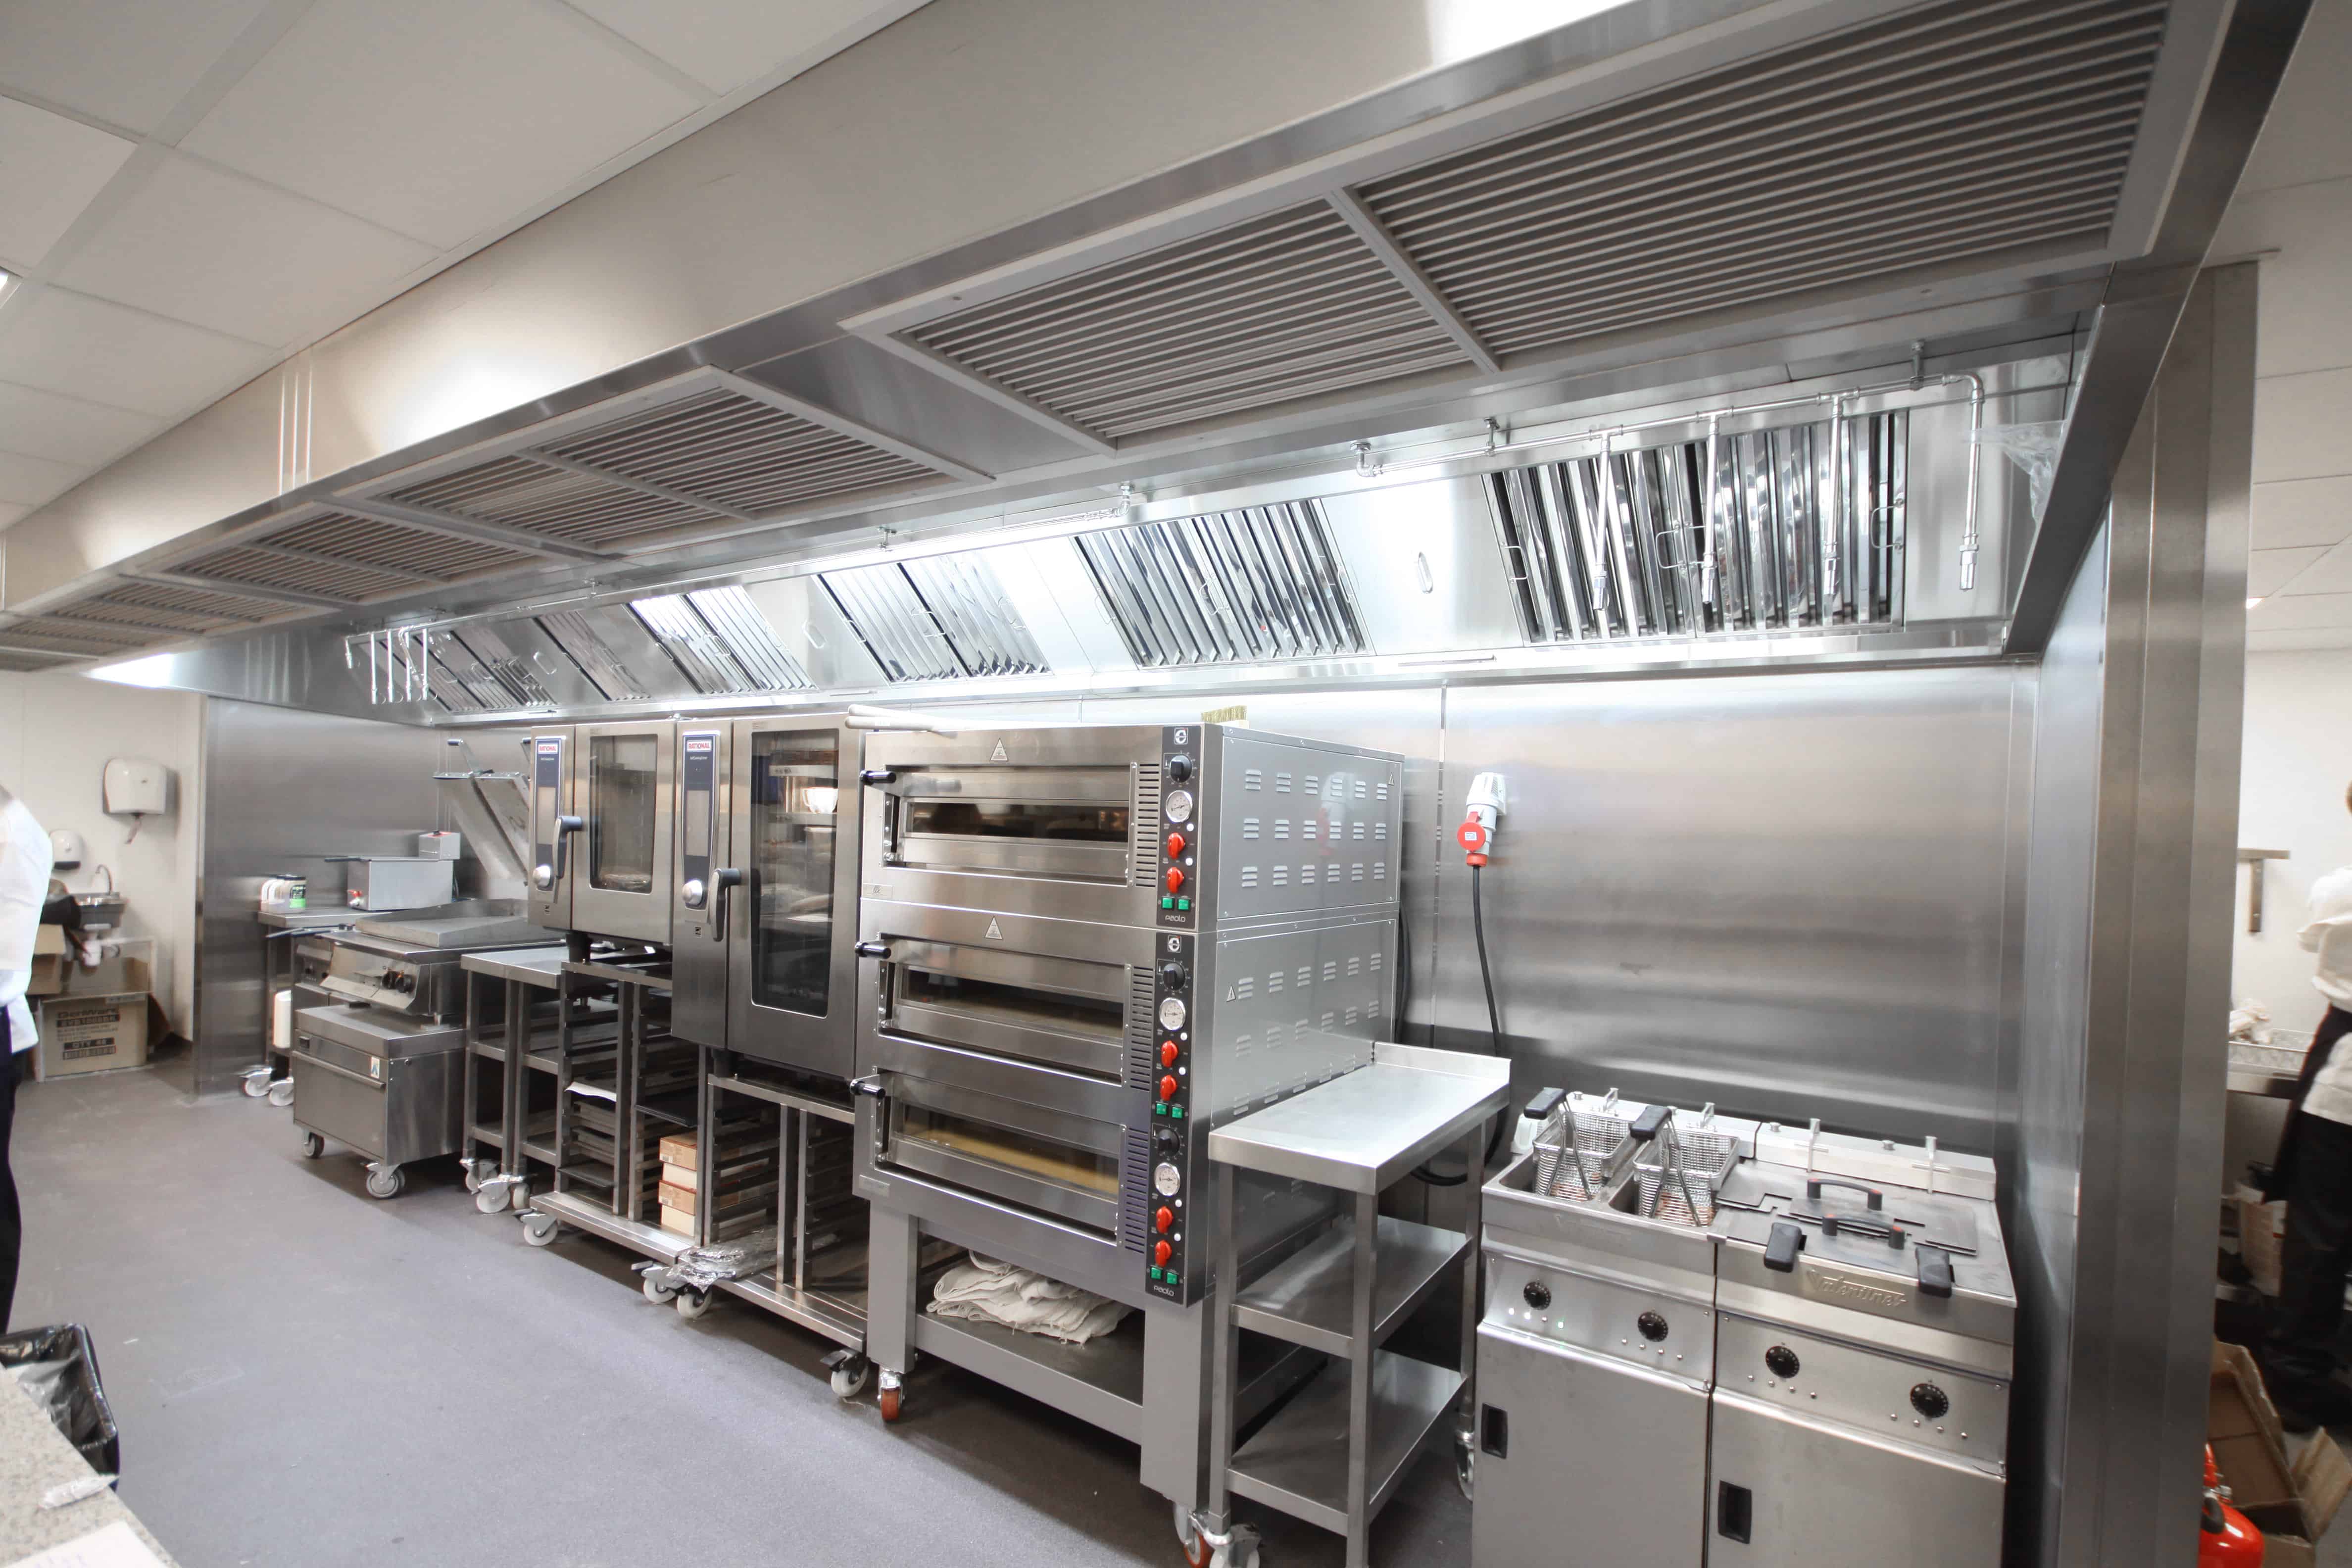 commercial kitchen ventilation system